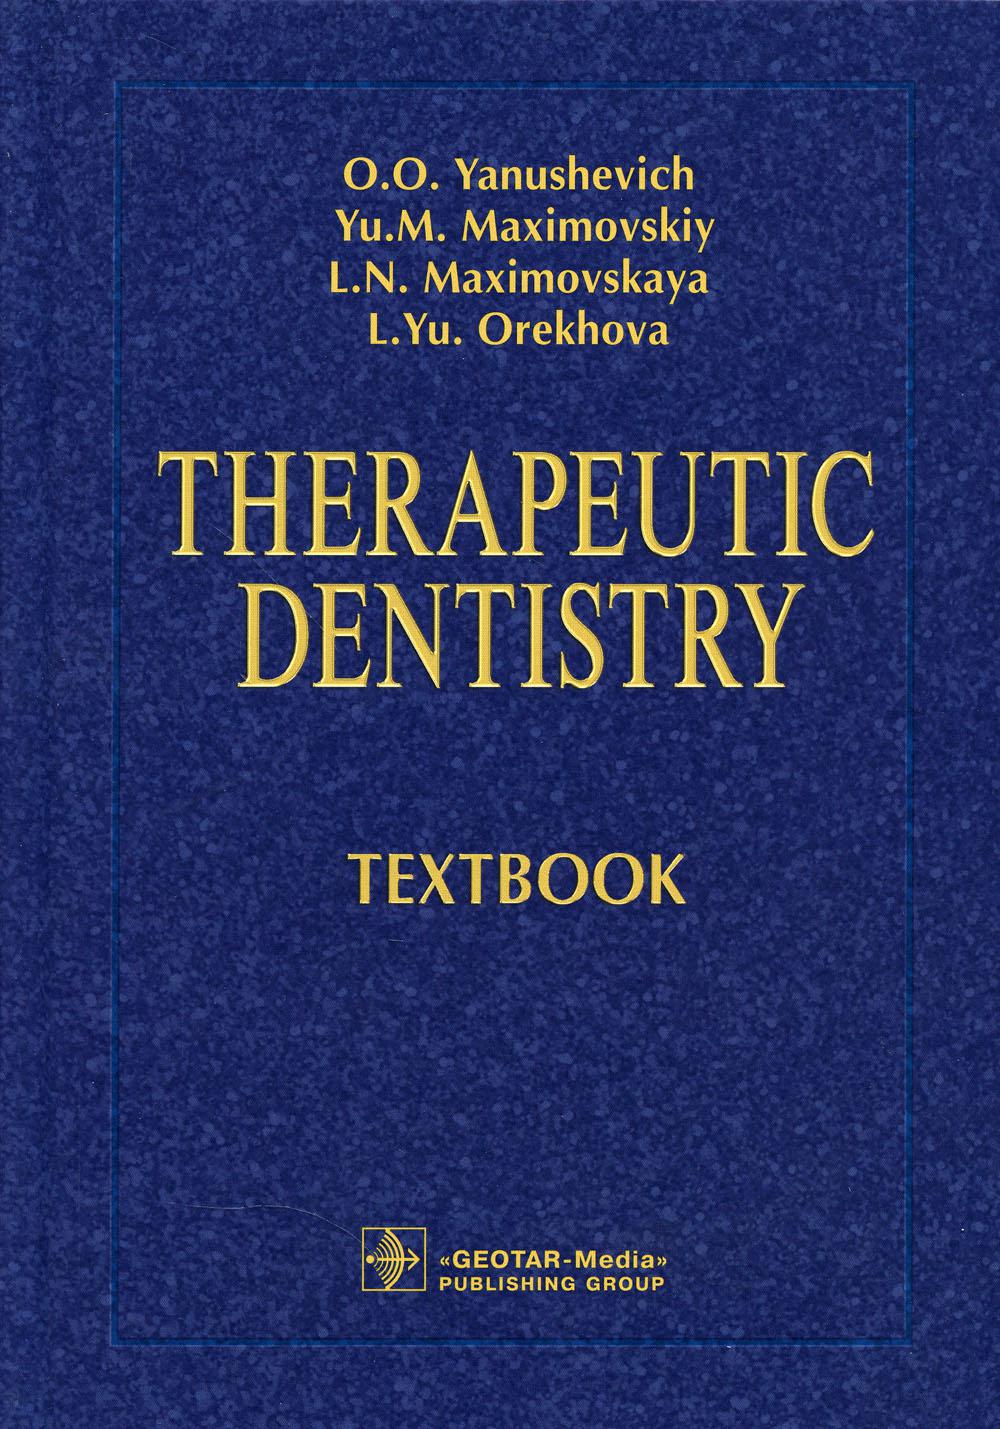 Therapeutic dentistry: textbook / O. O. Yanushevich, Yu. M. Maximovskiy, L. N. Maxi movskaya, L. Yu. Orekhova.  Moscow : GEOTAR-Media, 2021.  672 p.: il.  DOI: 10.33029/9704-5842-6-THE-2021-1-672.